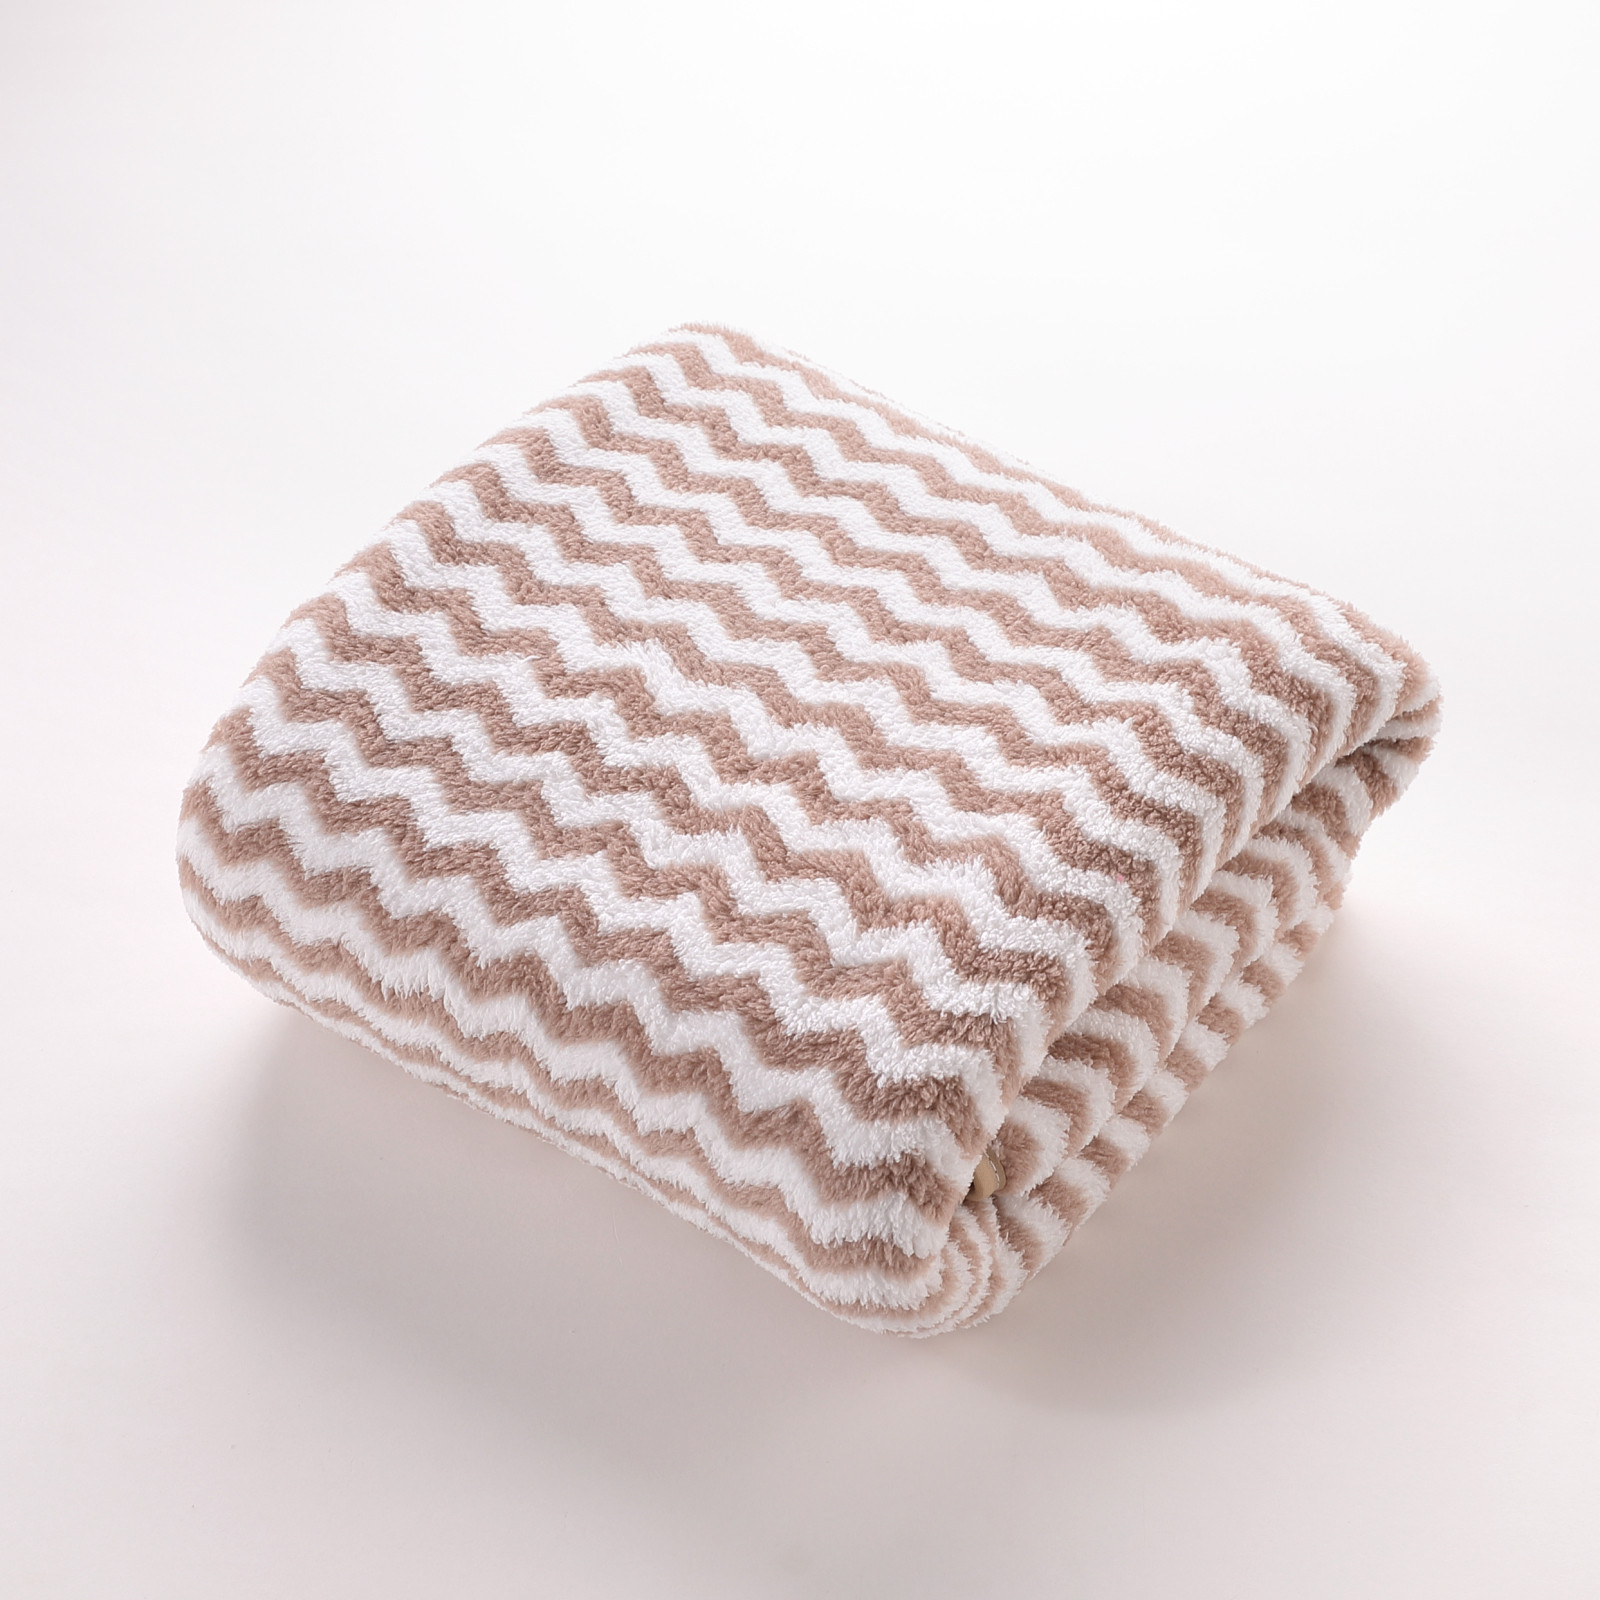 Kuber Industries Bath Towel For Men, Women|280 GSM|Extra Soft & Fade Resistant|Polyester Towels For Bath|Stripes Design|Bathing Towel, Bath Sheet (Brown)